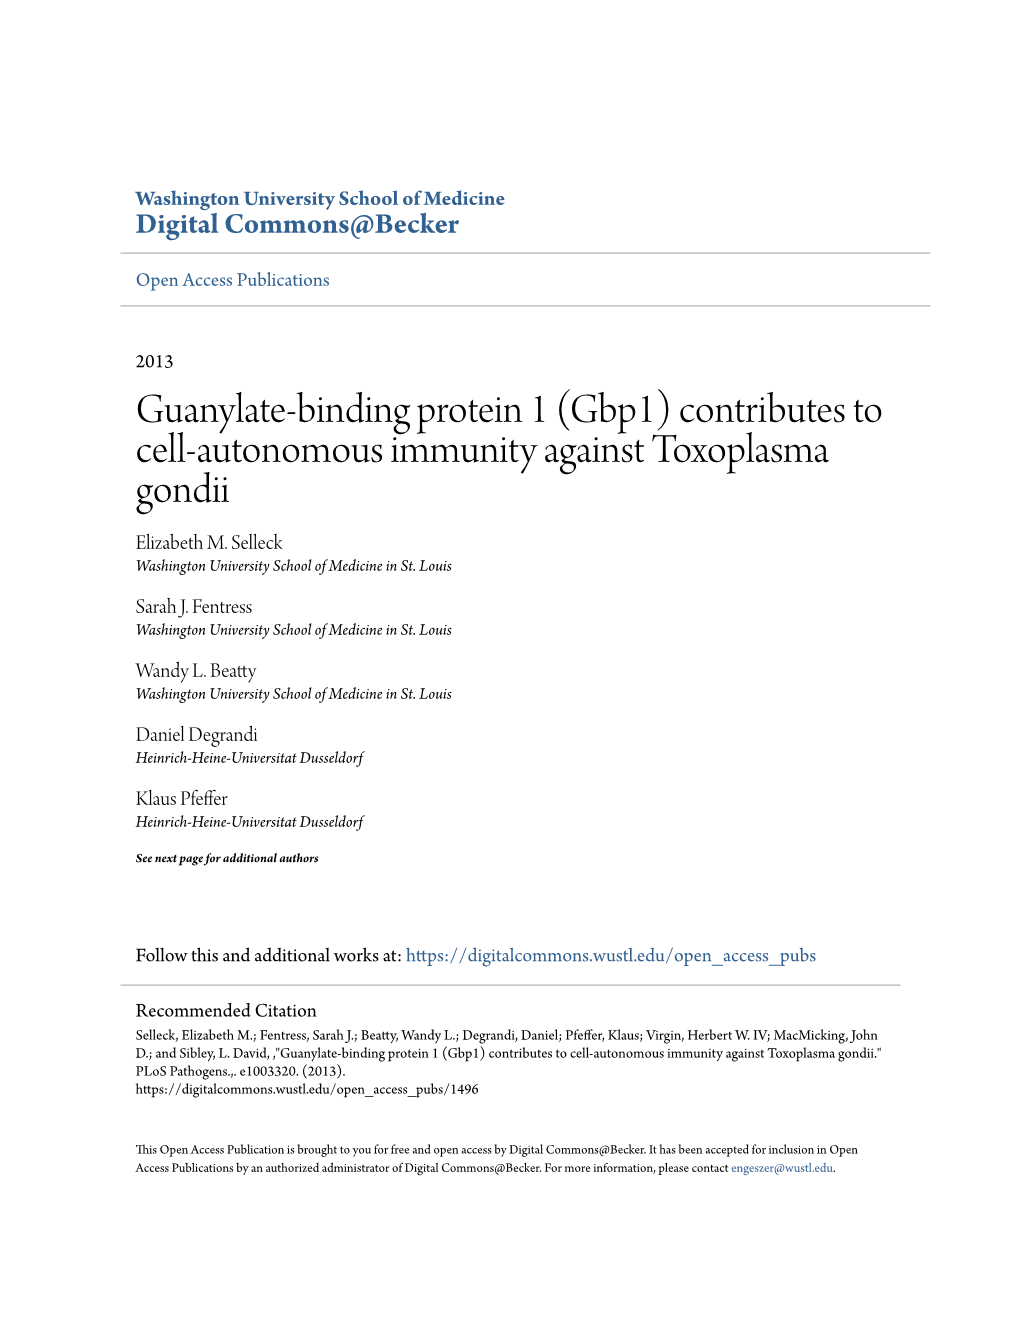 Contributes to Cell-Autonomous Immunity Against Toxoplasma Gondii Elizabeth M